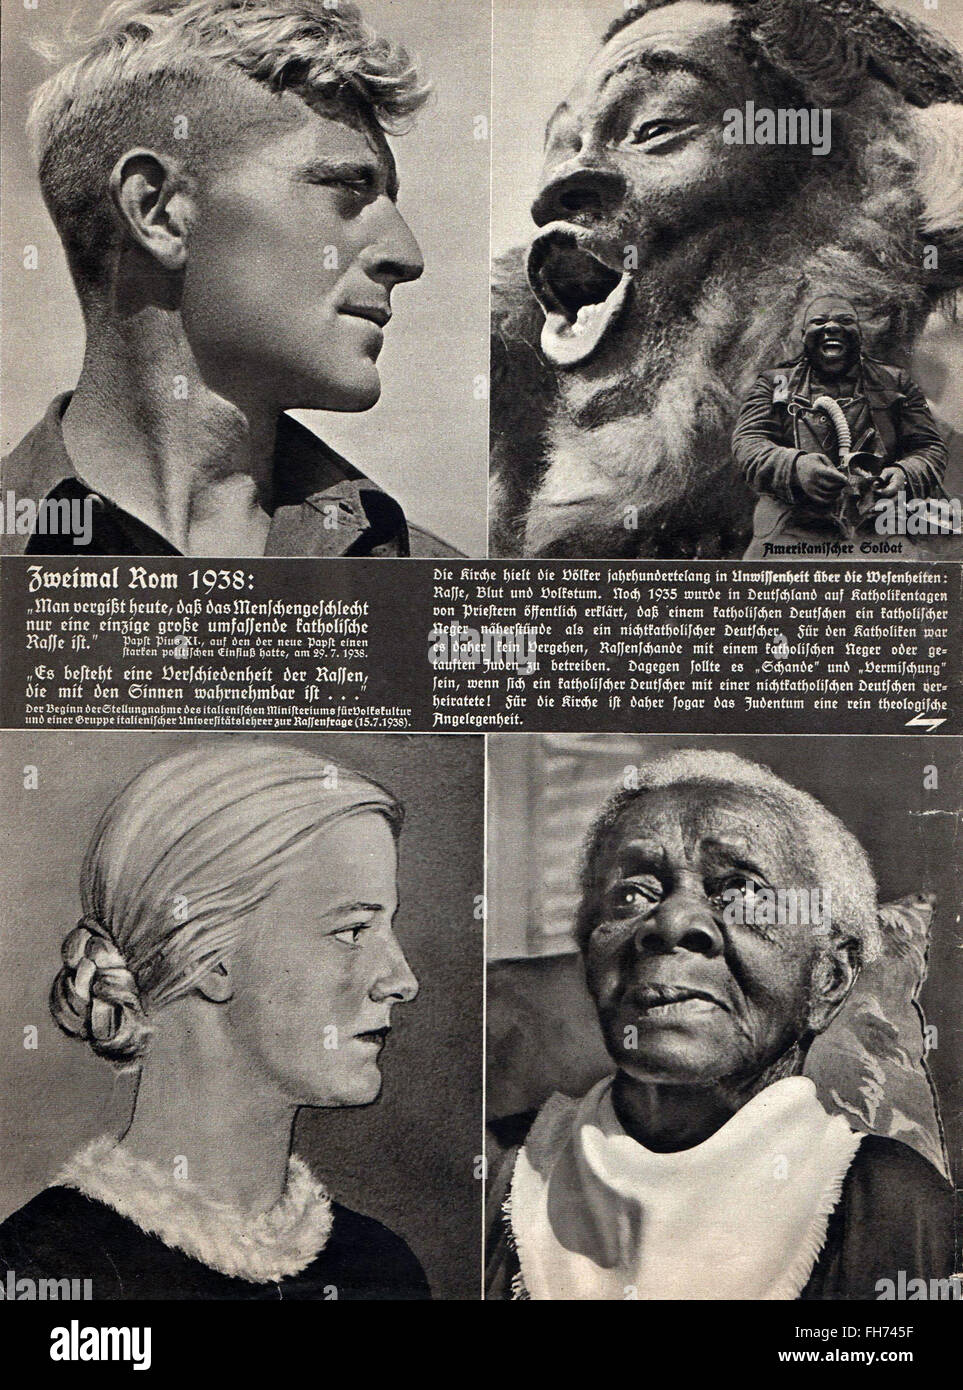 Rasist Propaganda - German Nazi Propaganda Poster - WWII Stock Photo